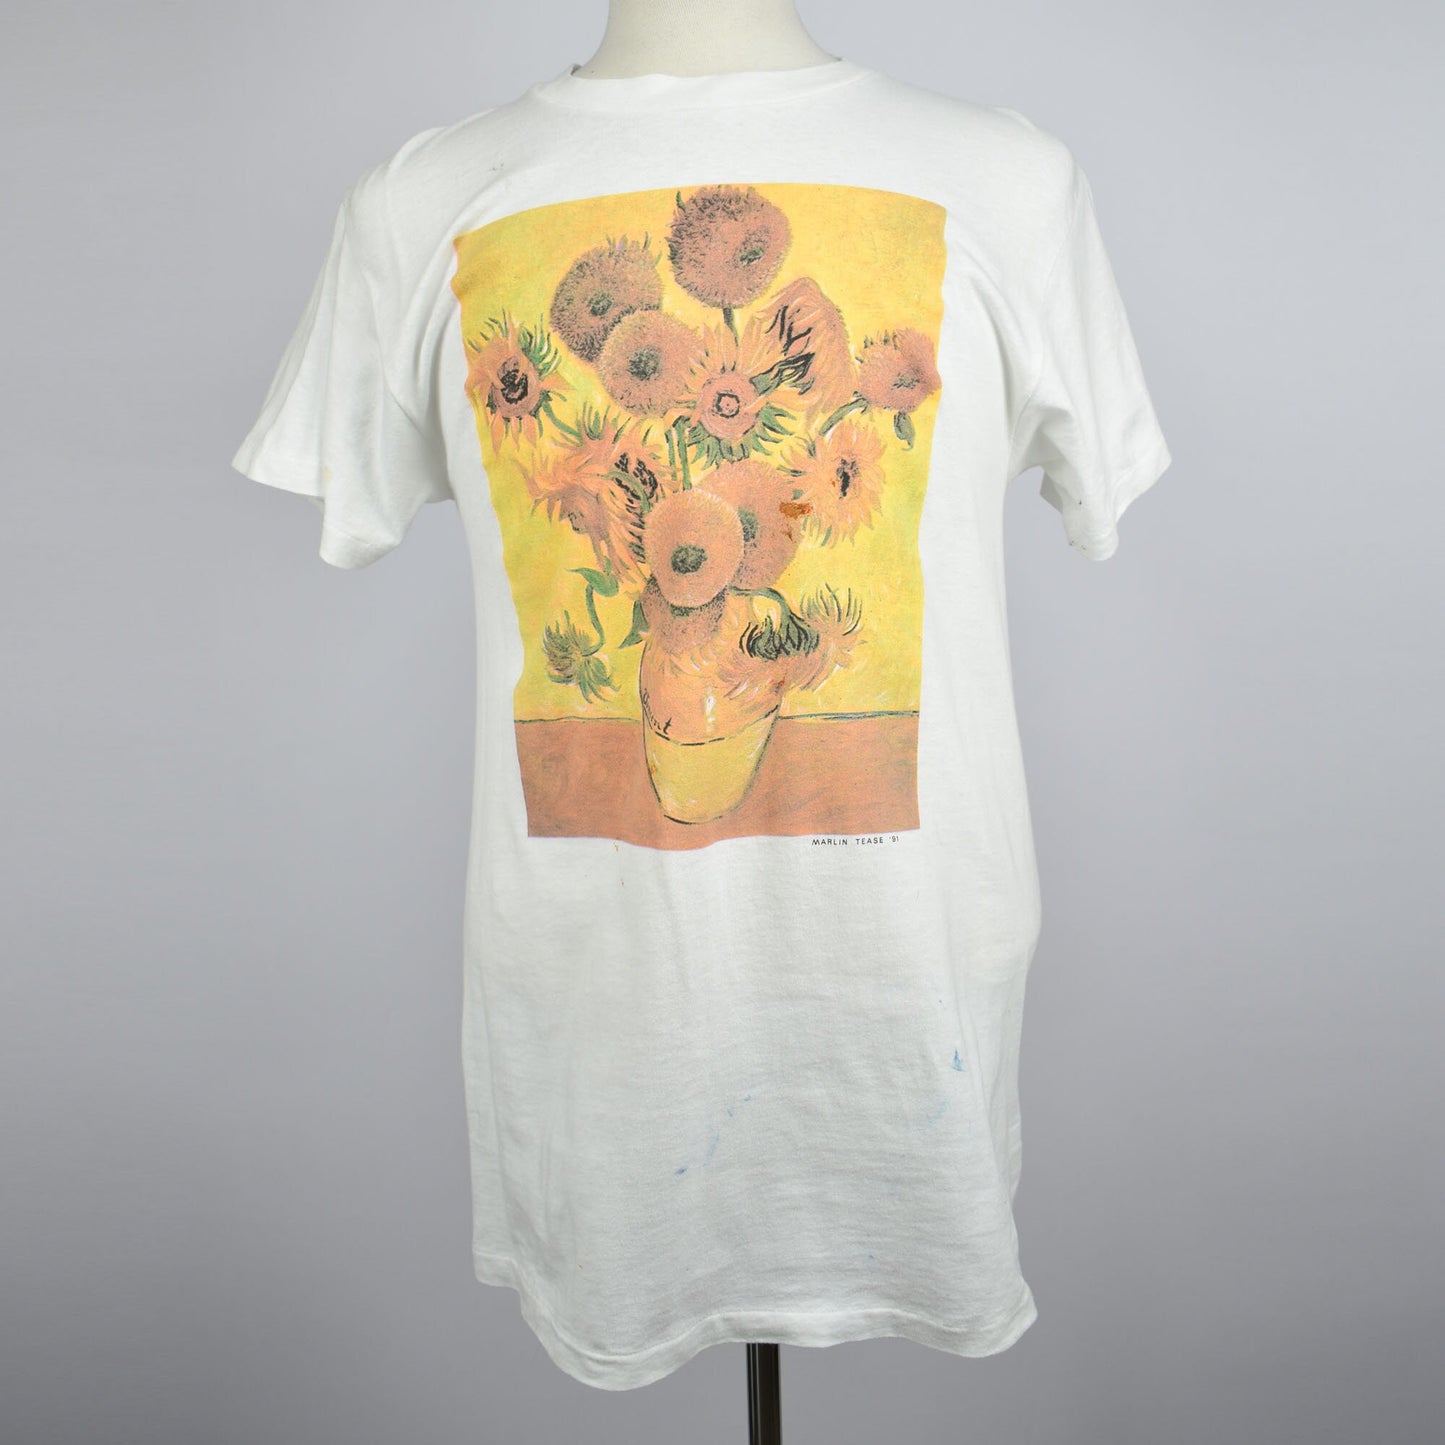 Vintage 1991 Van Gogh "Sunflowers" Printed 100% Tee by Ralph Marlin- Size M